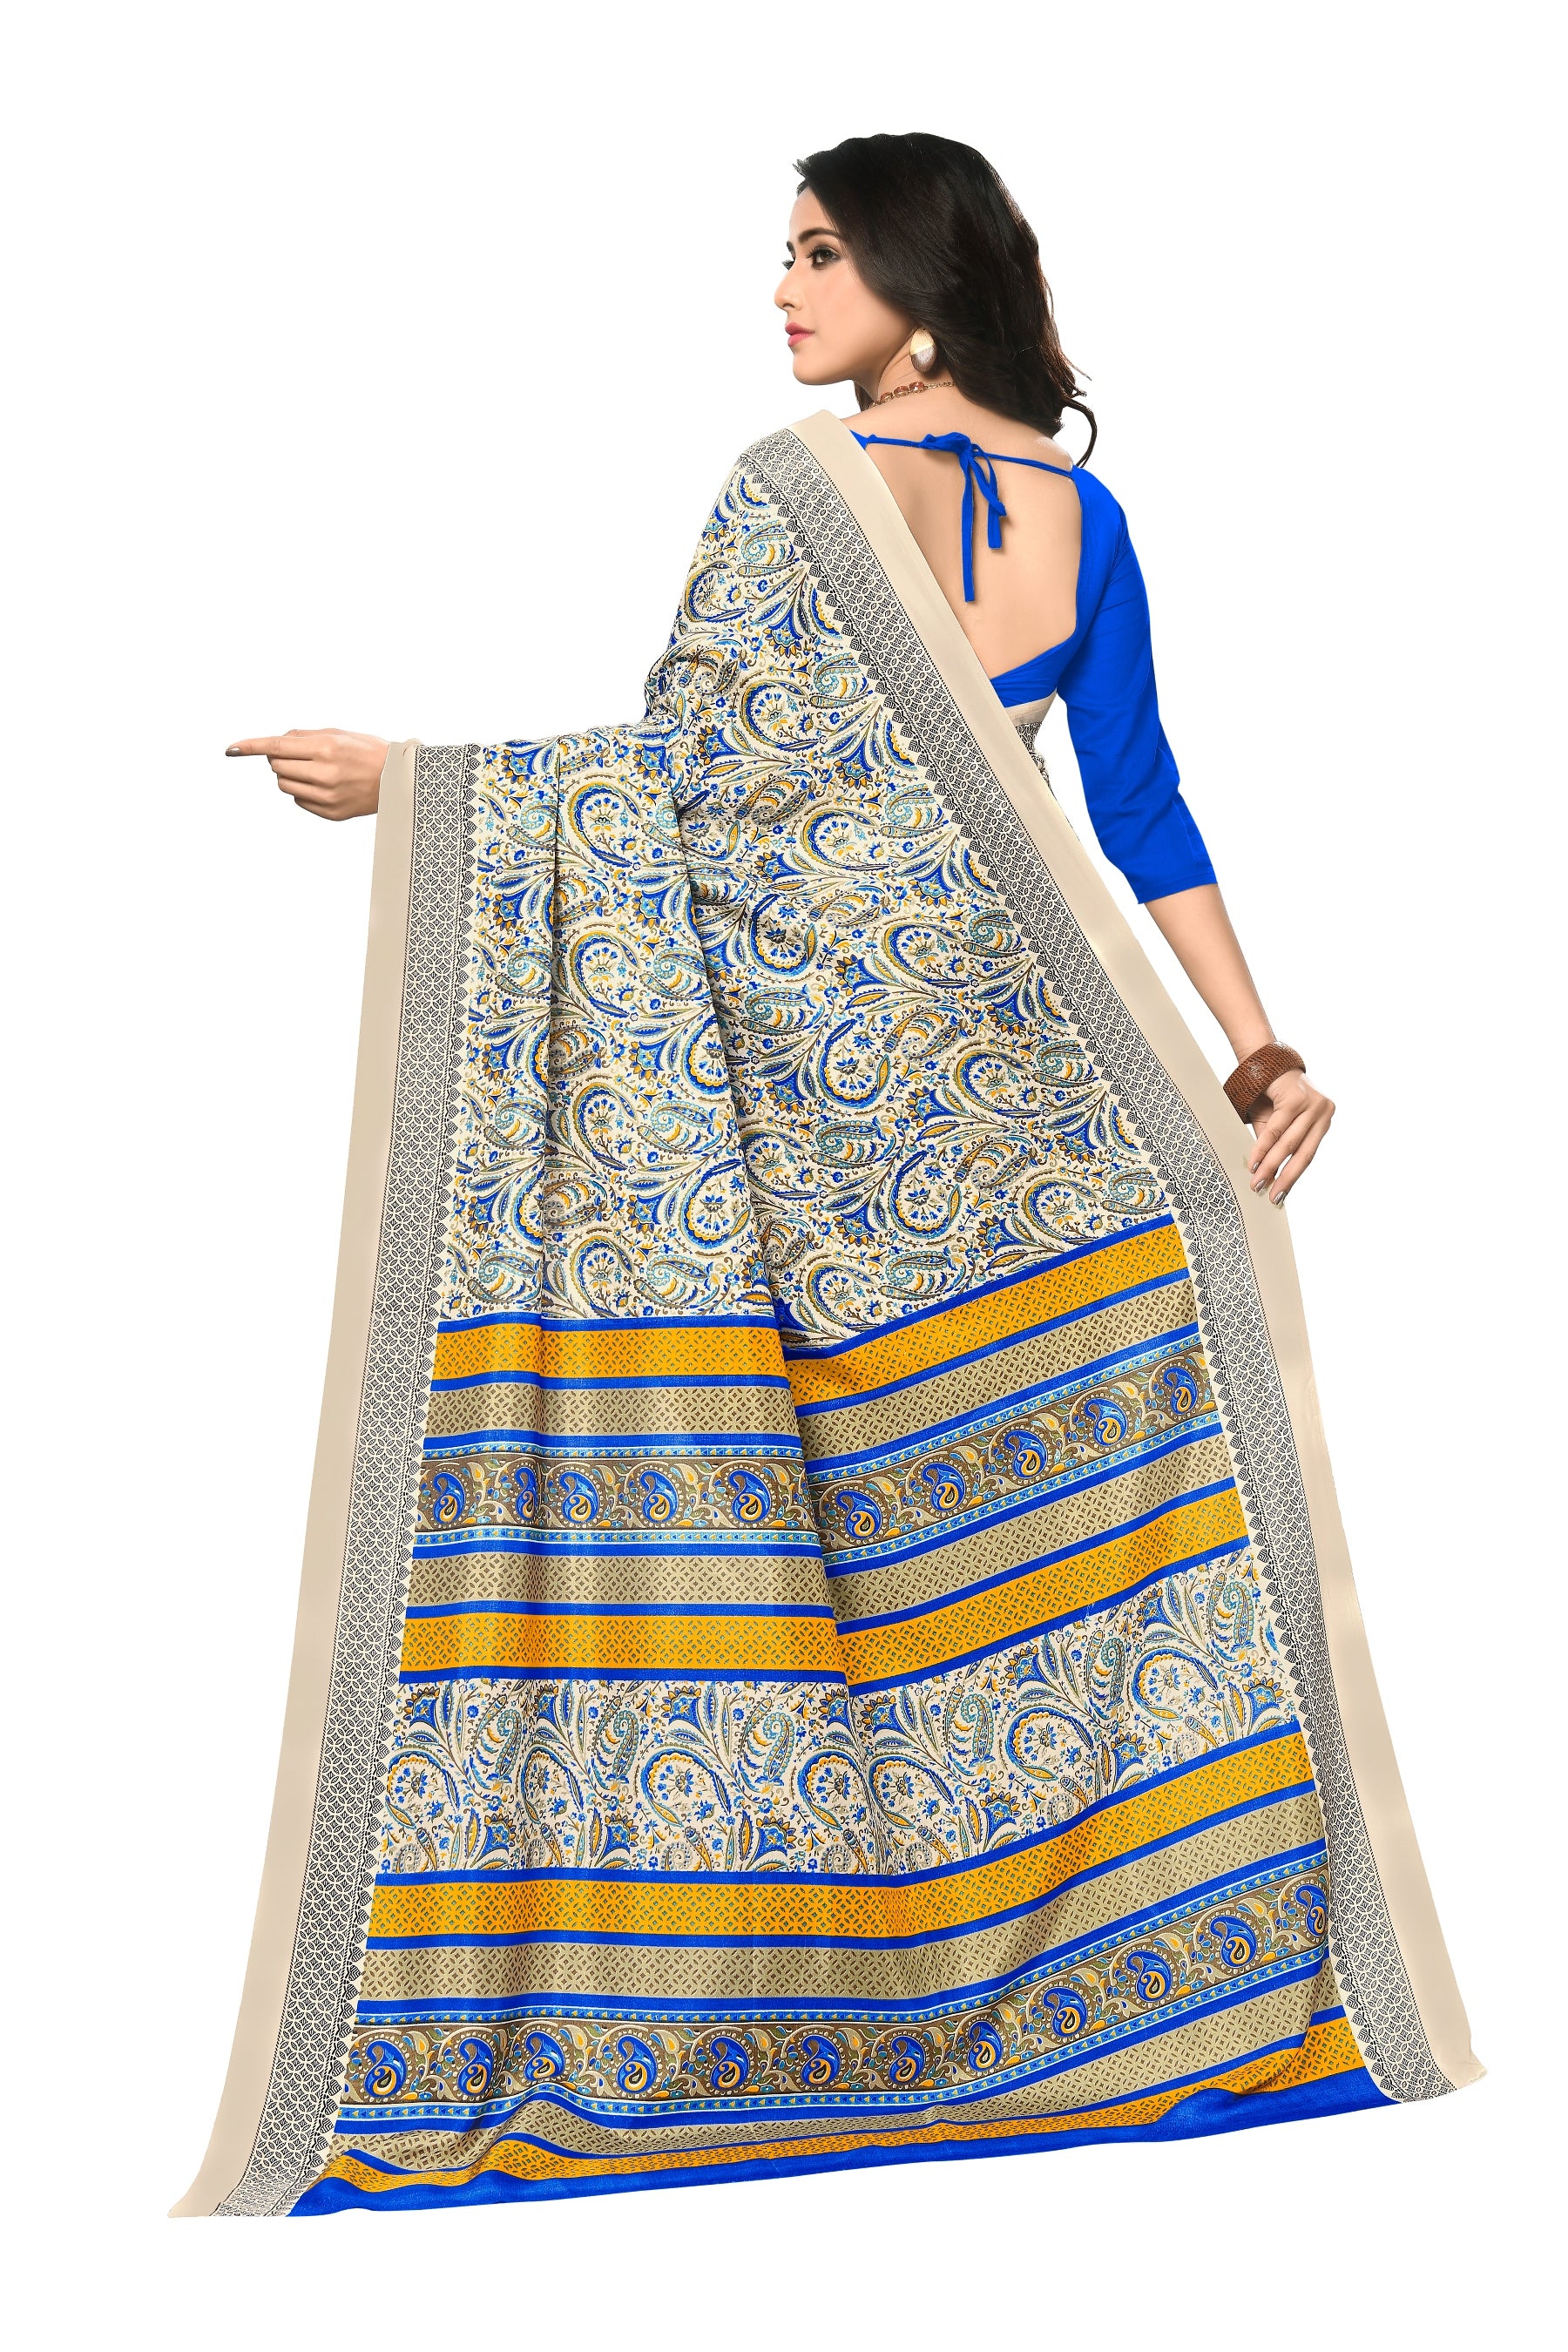 Vimla Women's Beige Malgudi Art Silk Uniform Saree with Blouse Piece (2301_Beige)